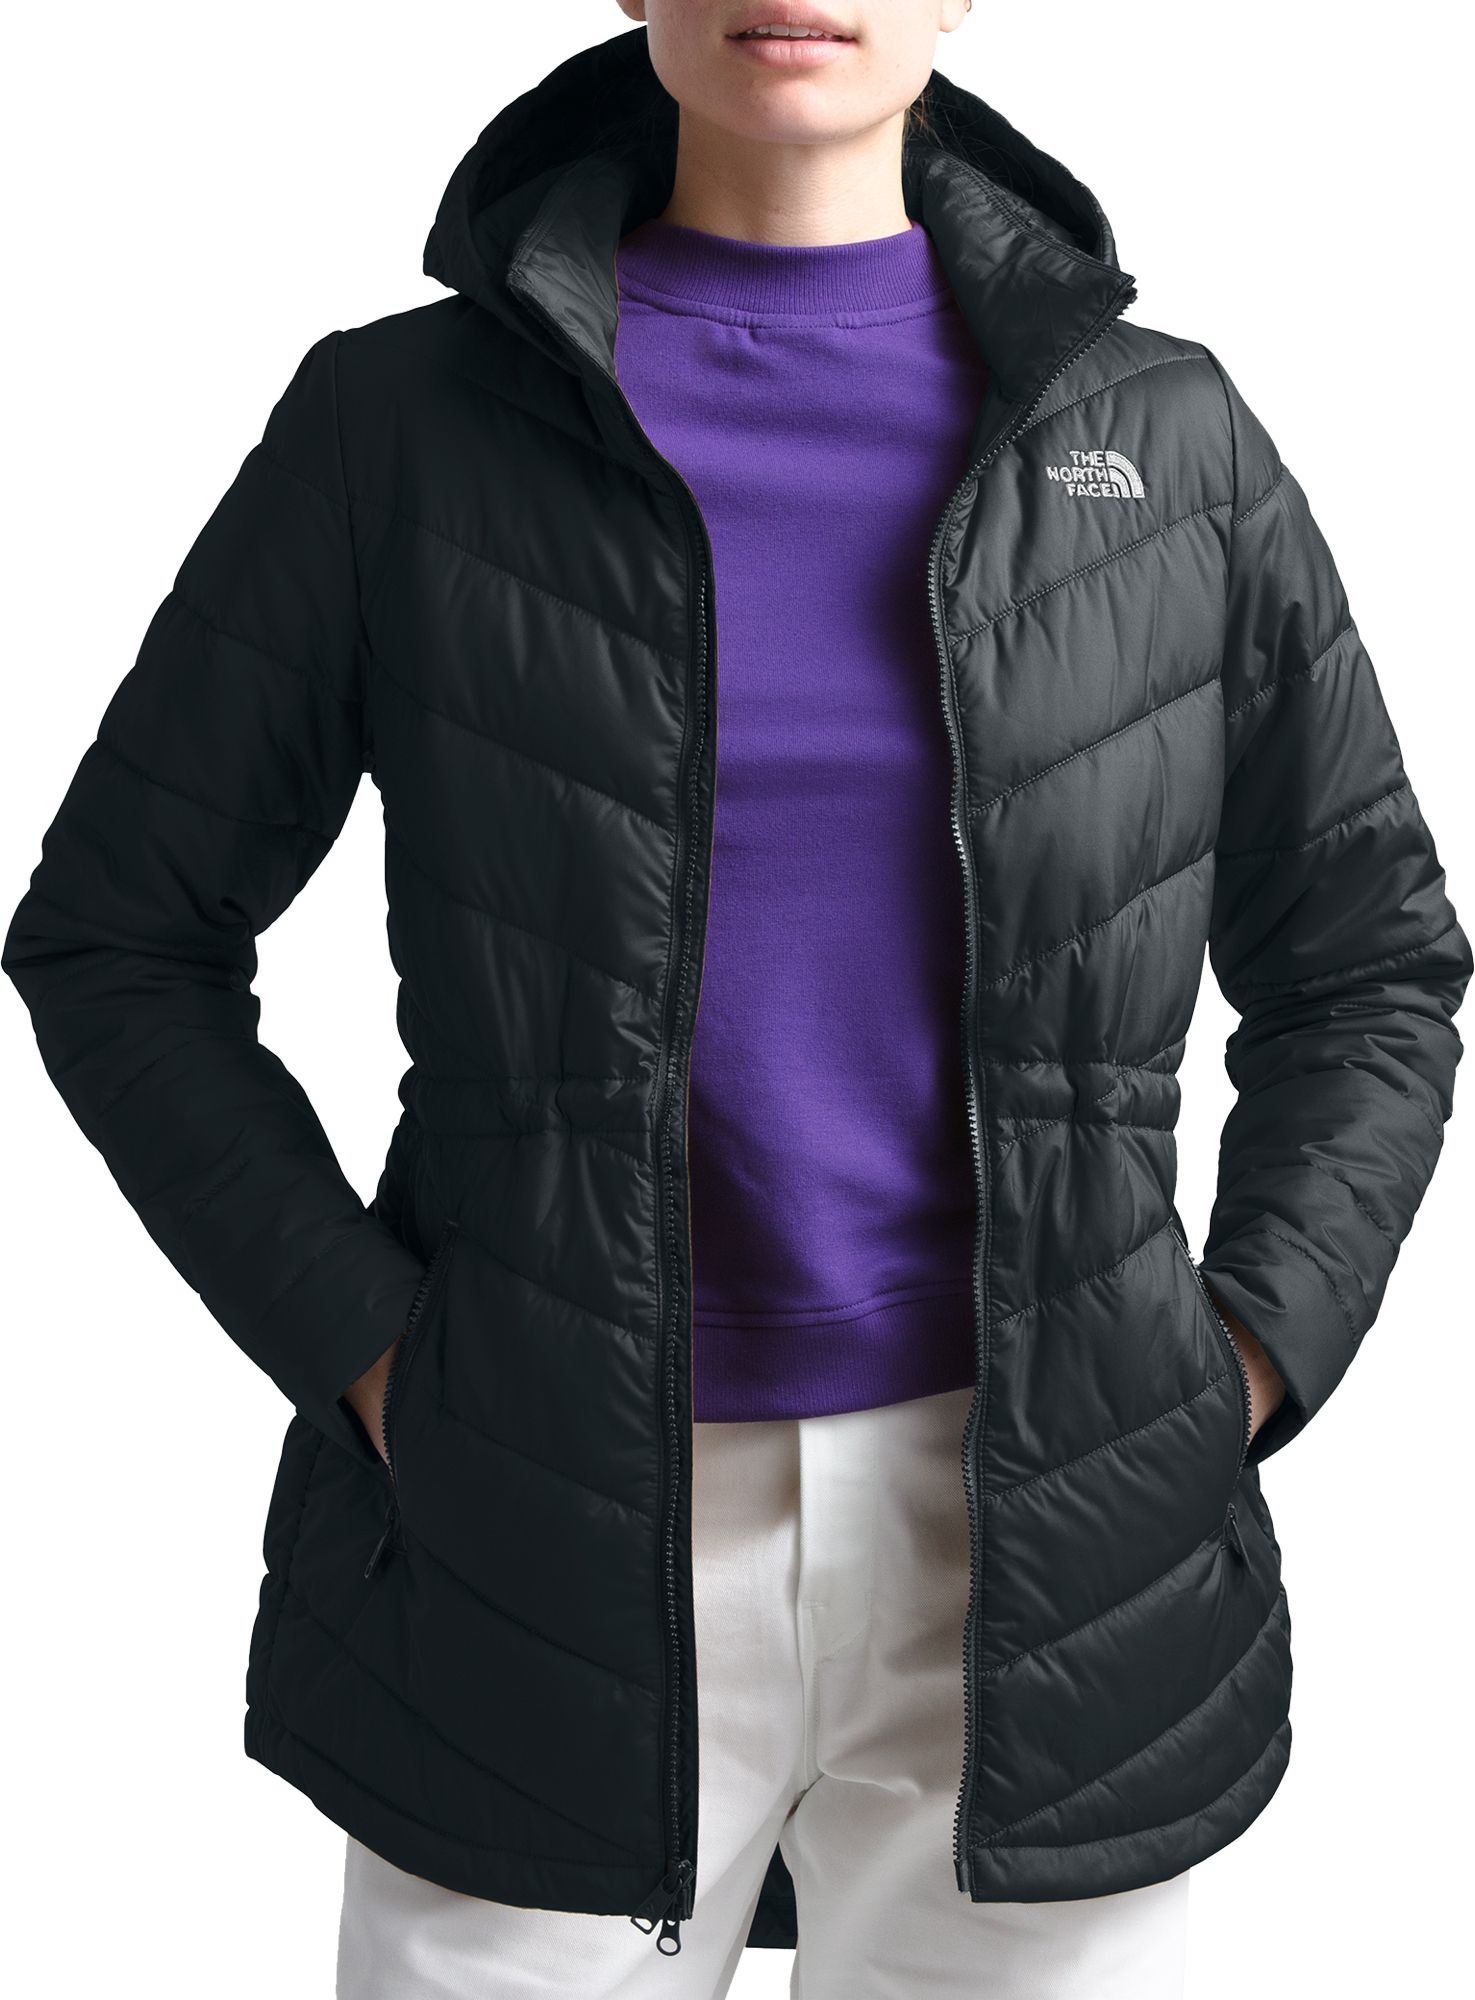 North Face Tamburello Jacket Womens Free Shipping Available